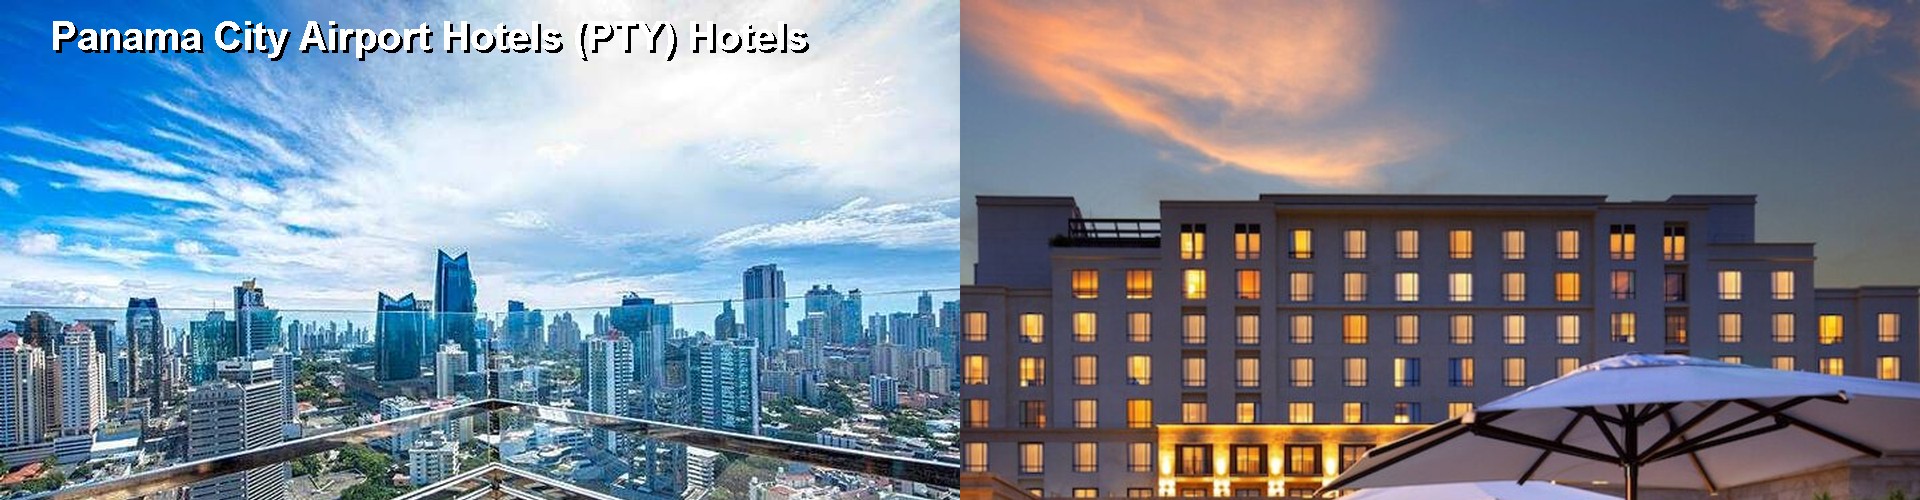 5 Best Hotels near Panama City Airport Hotels (PTY)